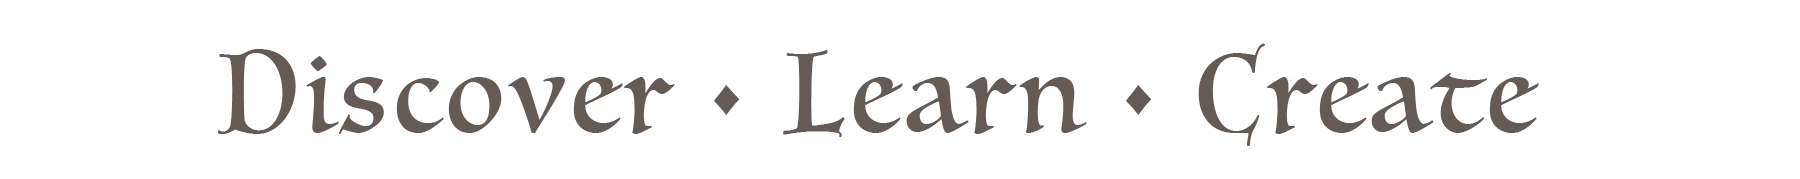 Discover, Learn & Create at Legacies III